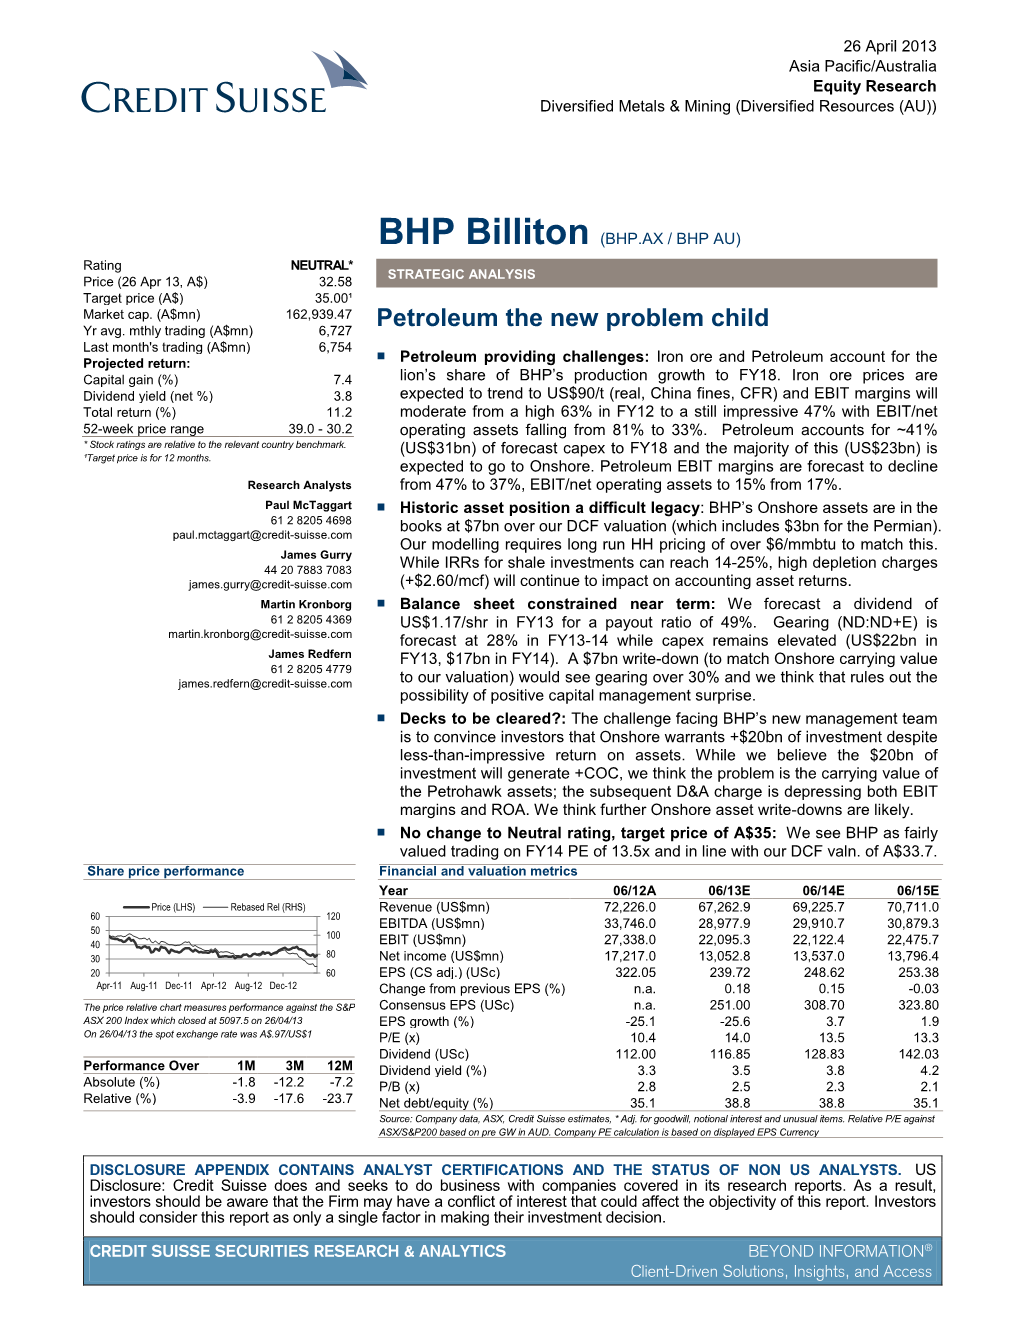 BHP Billiton (BHP.AX / BHP AU) Rating NEUTRAL* STRATEGIC ANALYSIS